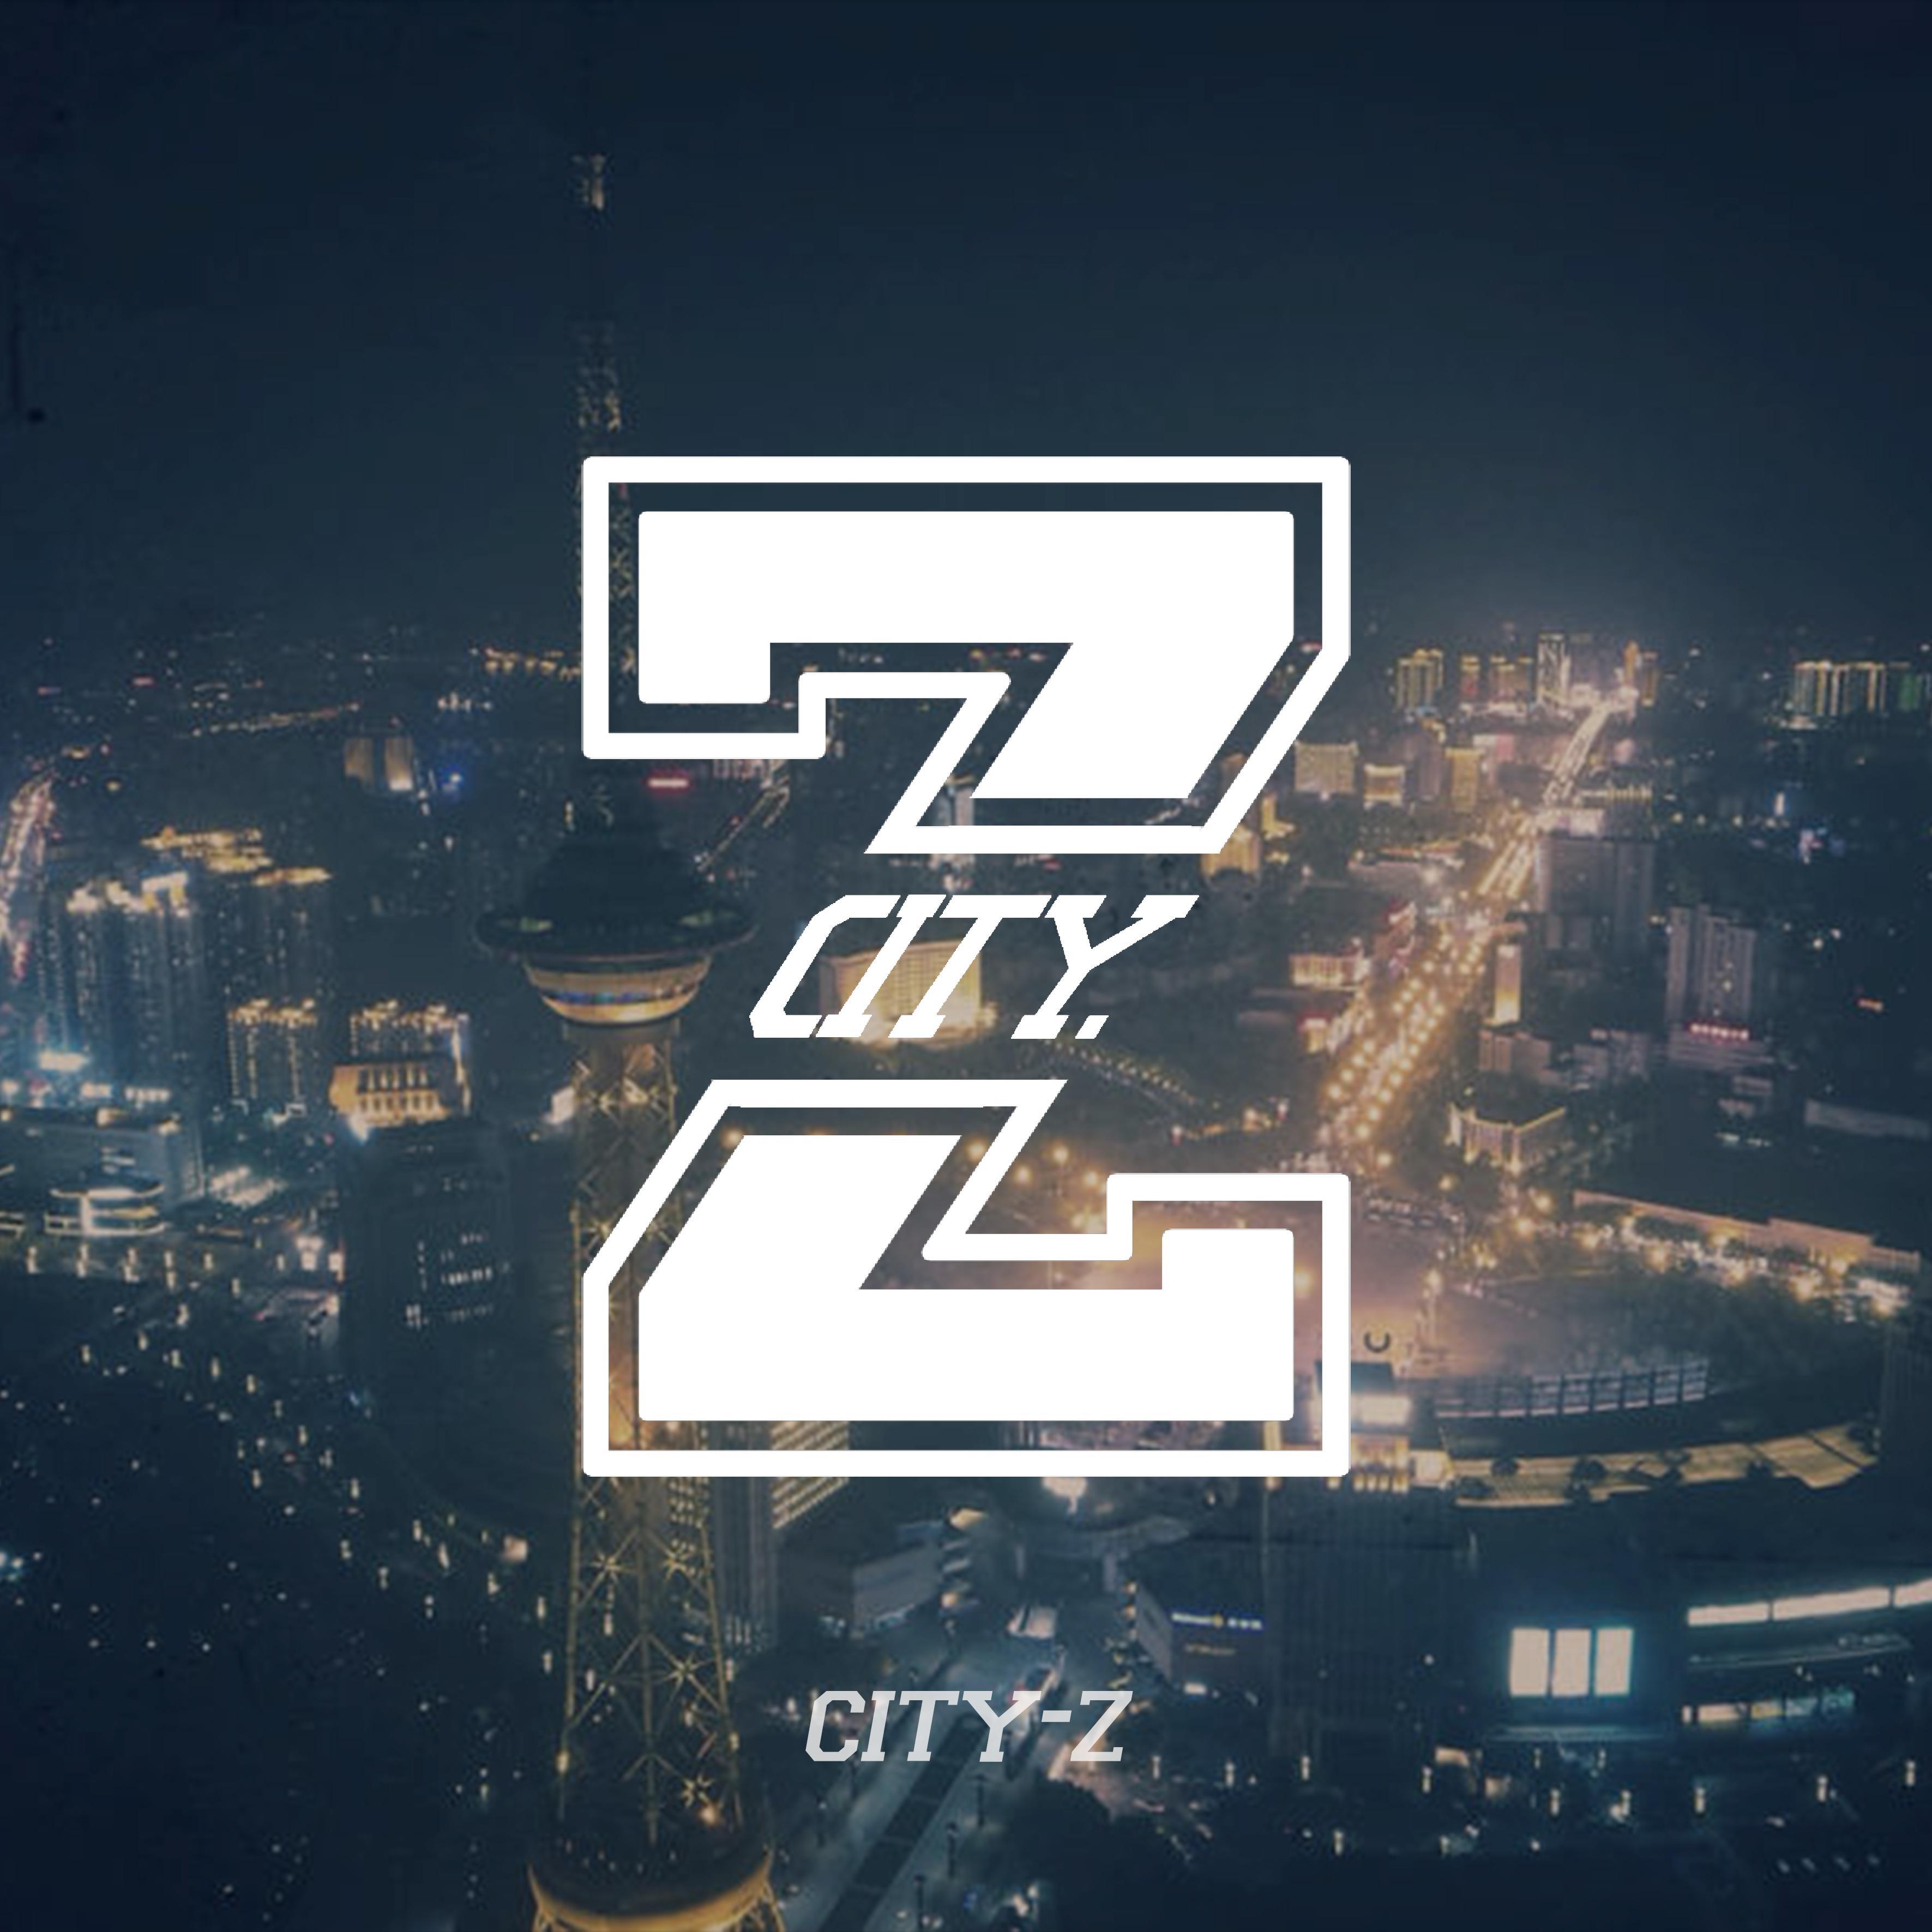 CITY Z - One Luv 4 My Z